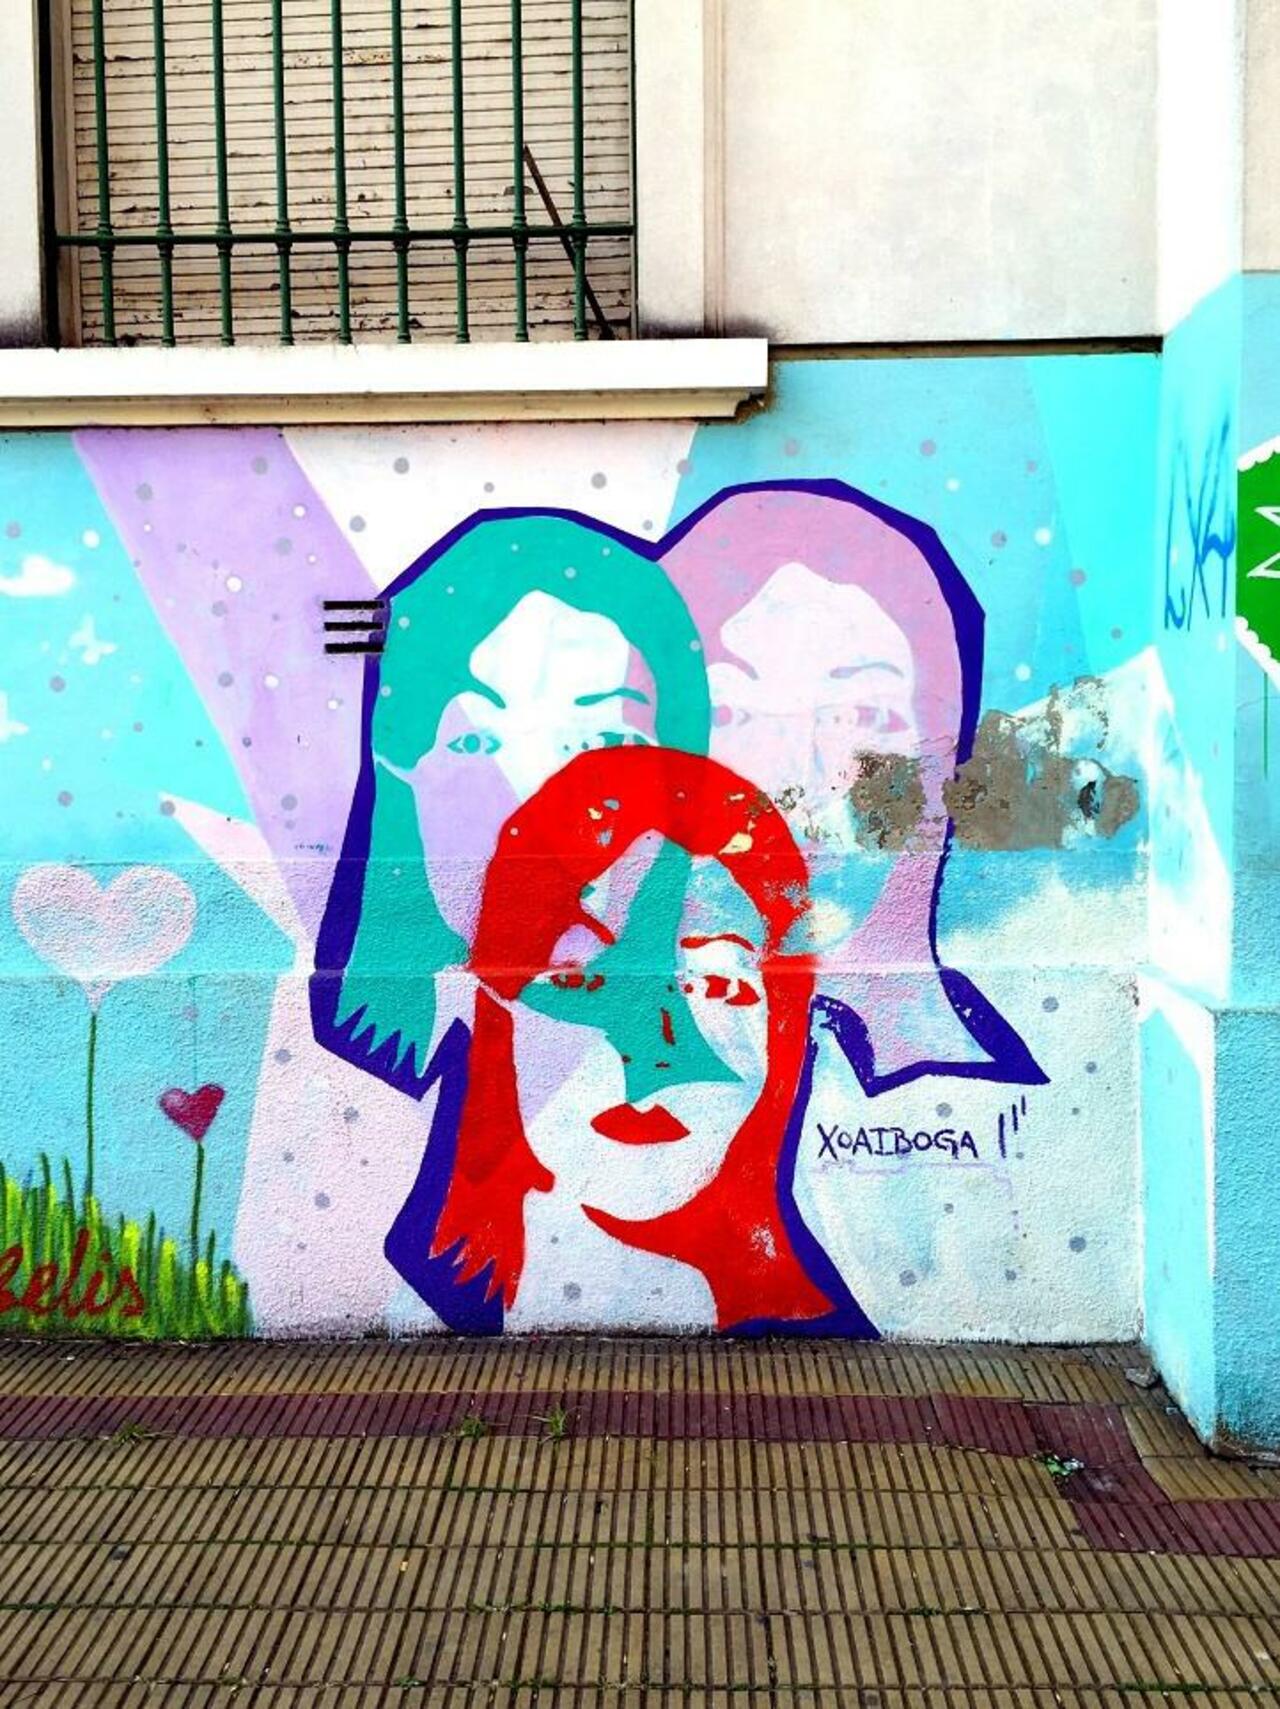 RT @DickieRandrup: #Graffiti de hoy: <<Fantasma de un amor perdido >> calle 66, 8y9 #LaPlata #Argentina #StreetArt #UrbanArt #ArteUrbano http://t.co/eRmfa6qZ9k